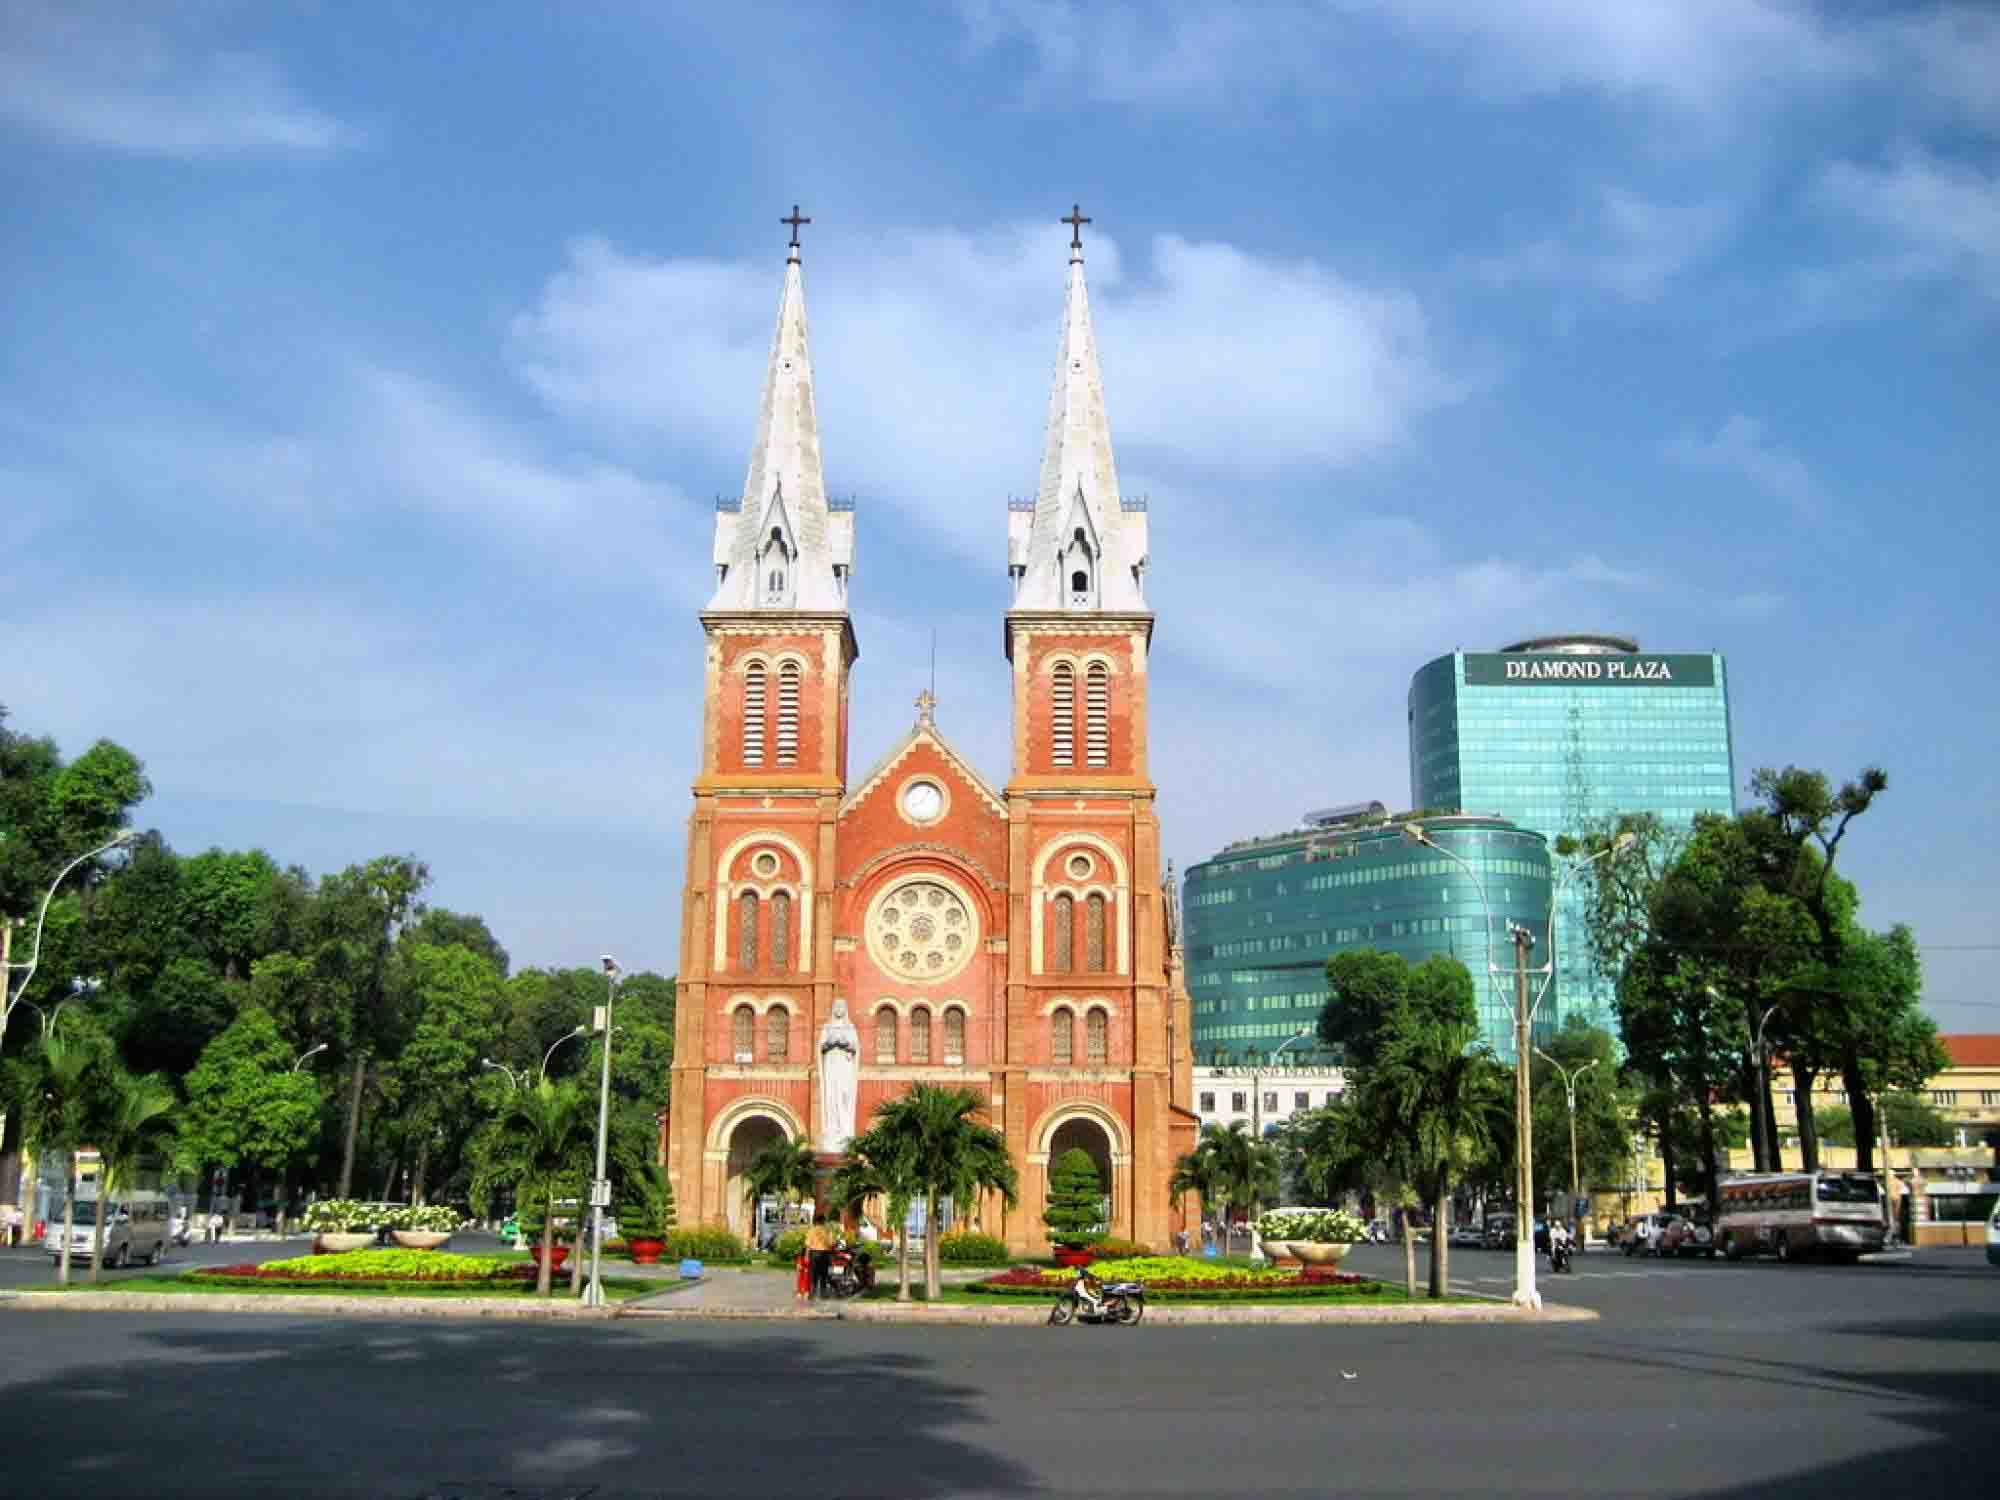 HO CHI MINH CITY & CU CHI TUNNEL image